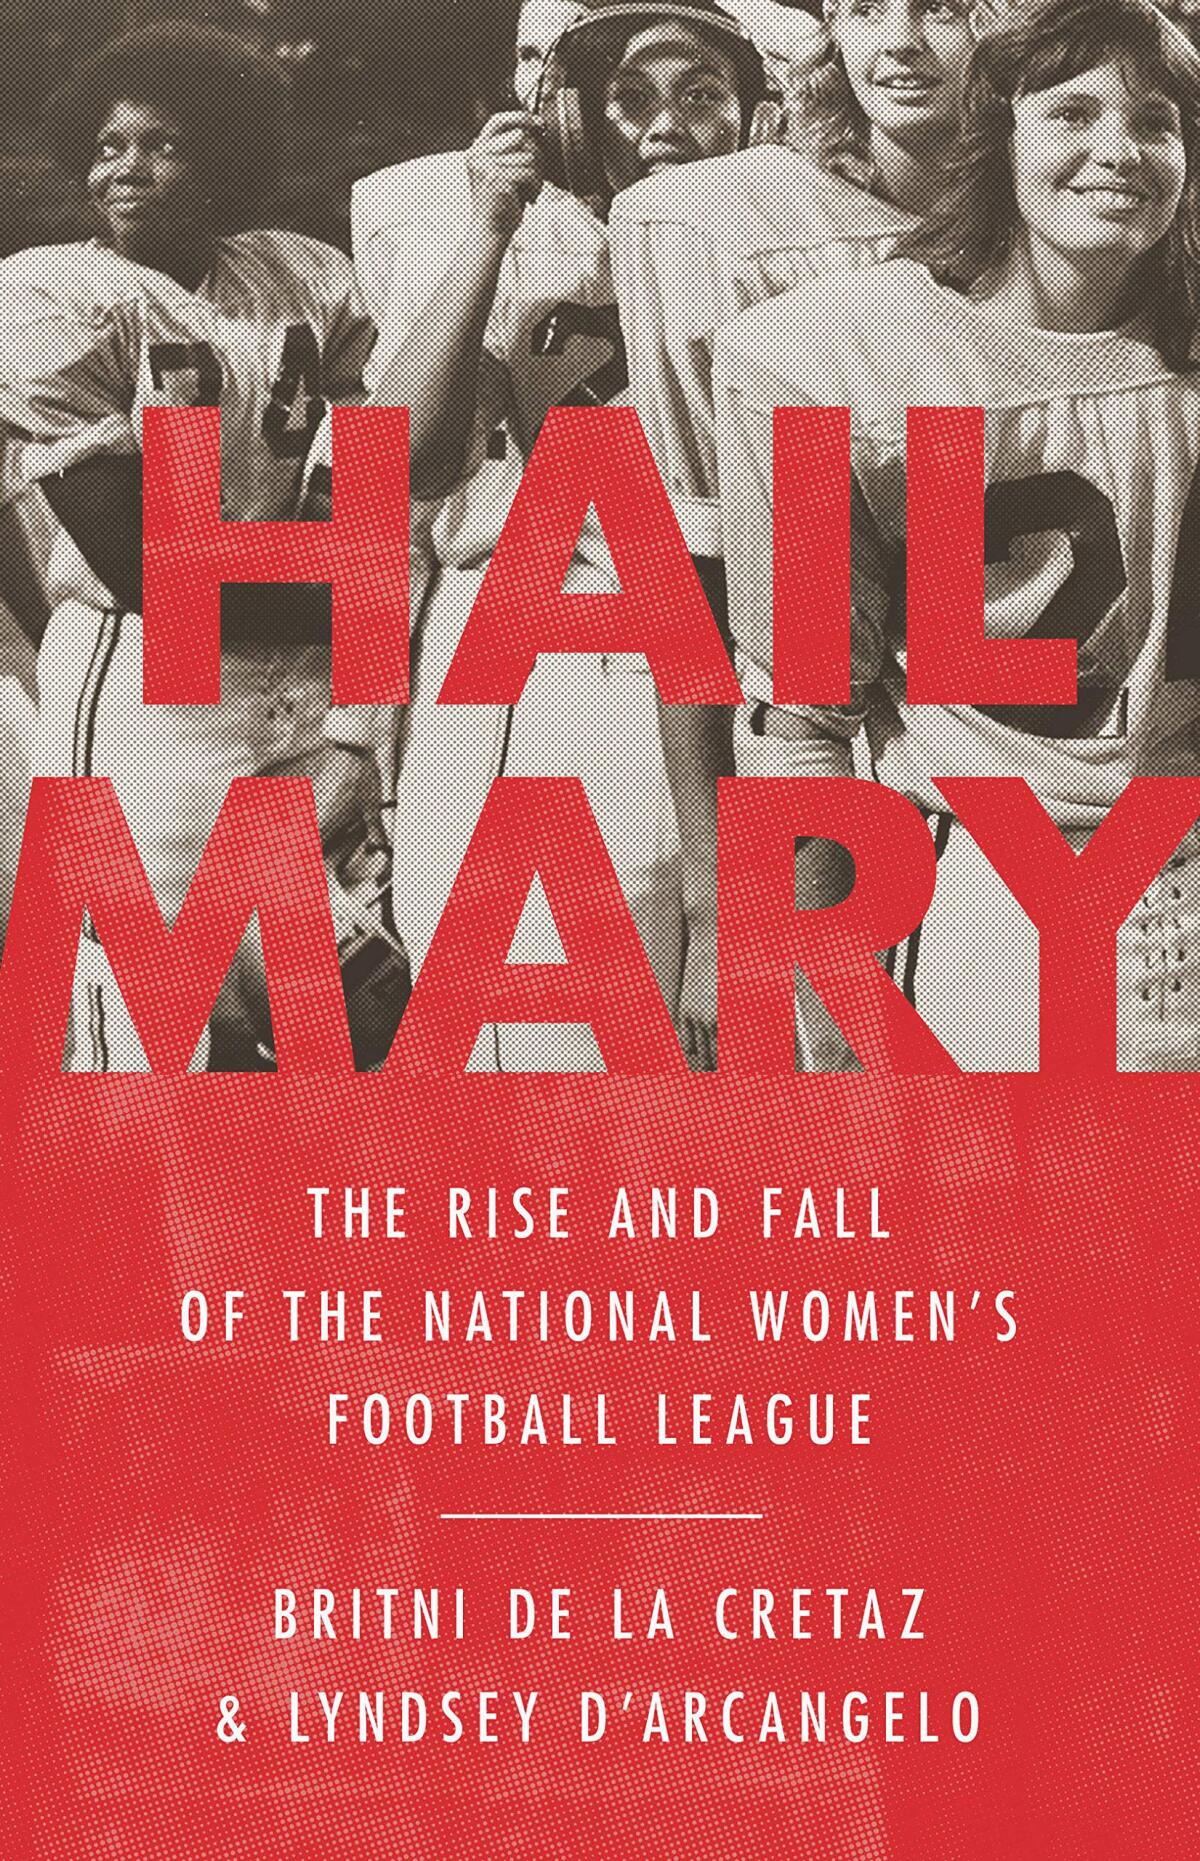 "Hail Mary: The Rise and Fall of the National Women's Football League" by Britni de la Cretaz and Lyndsey D'Arcangelo